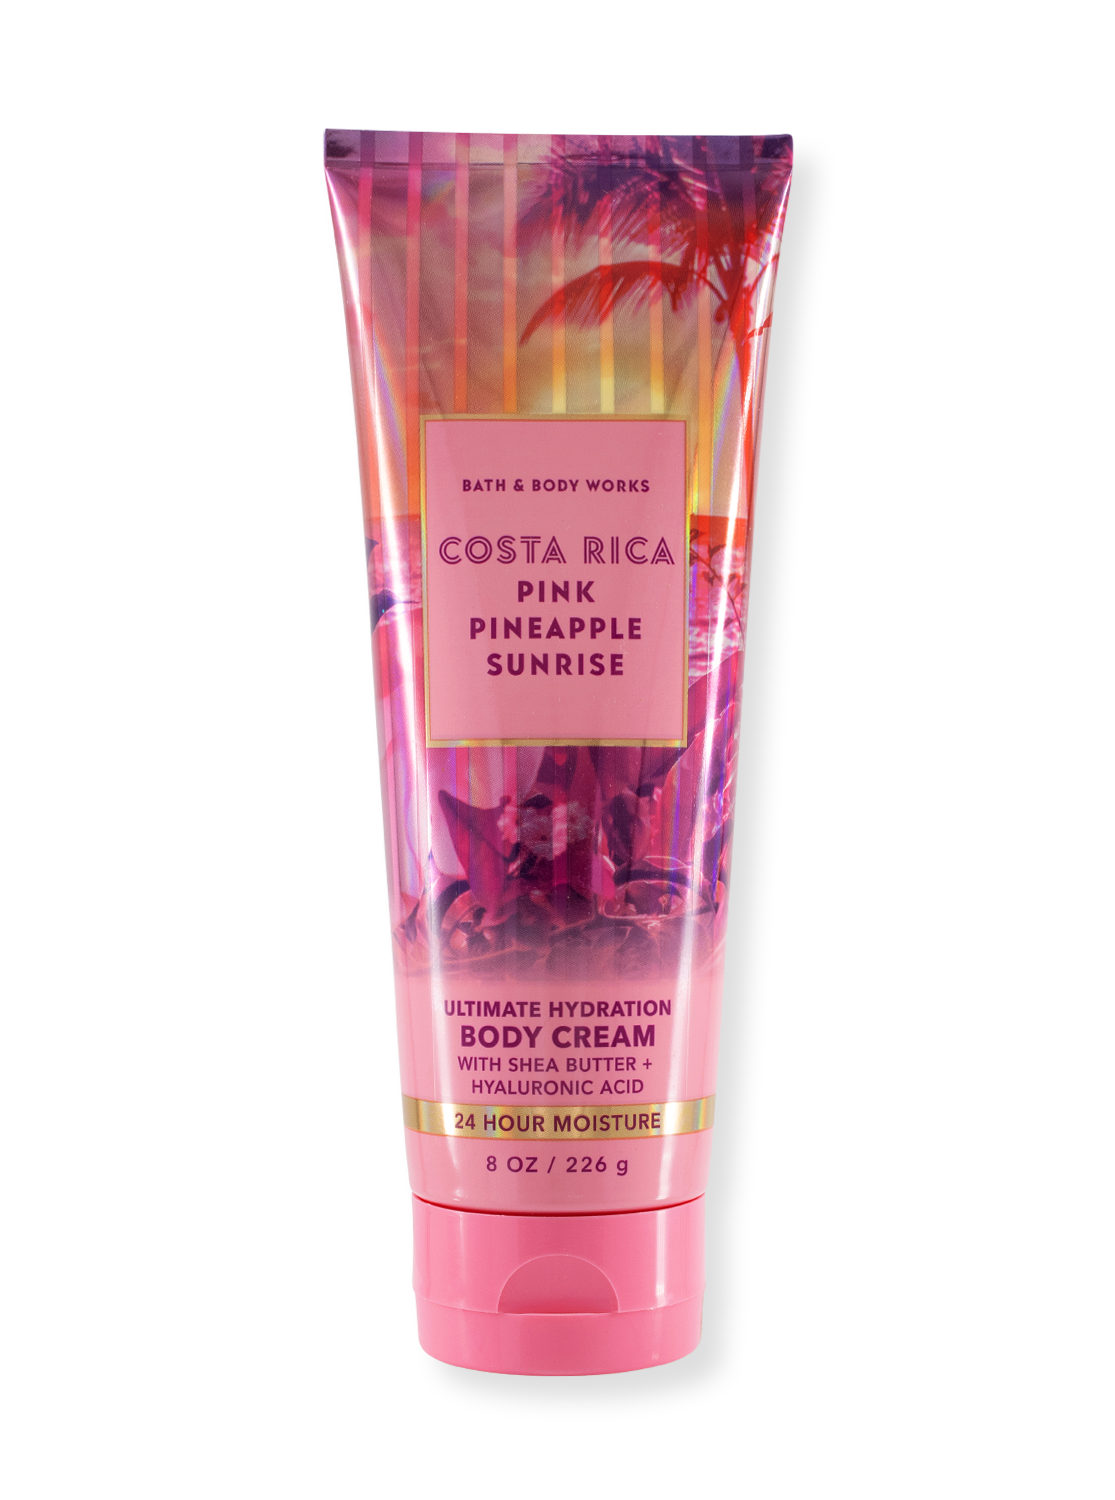 Crème du corps - Costa Rica - Sunrise à ananas rose - 226g